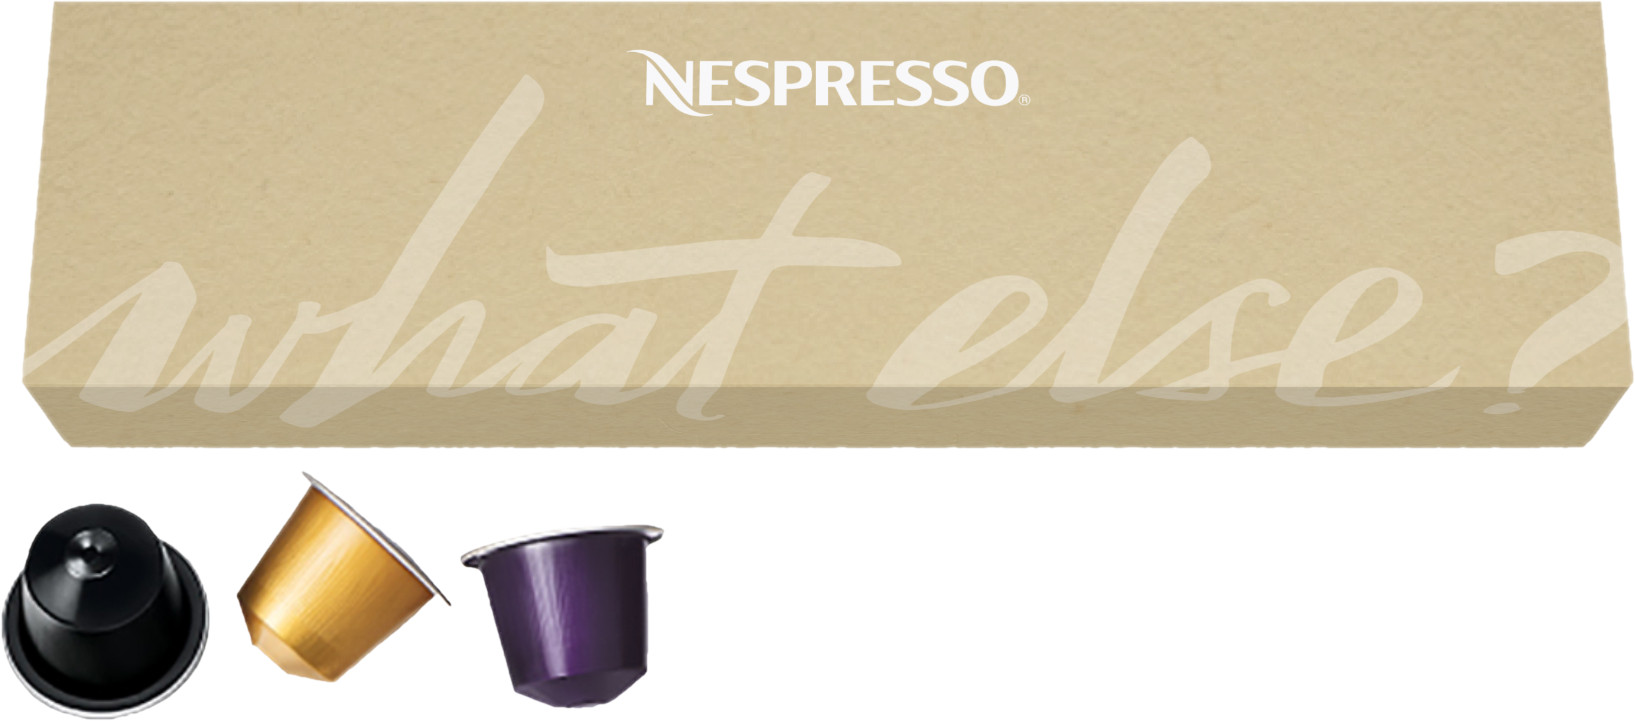 Krups Nespresso Citiz XN741B nespresso machine Handleiding